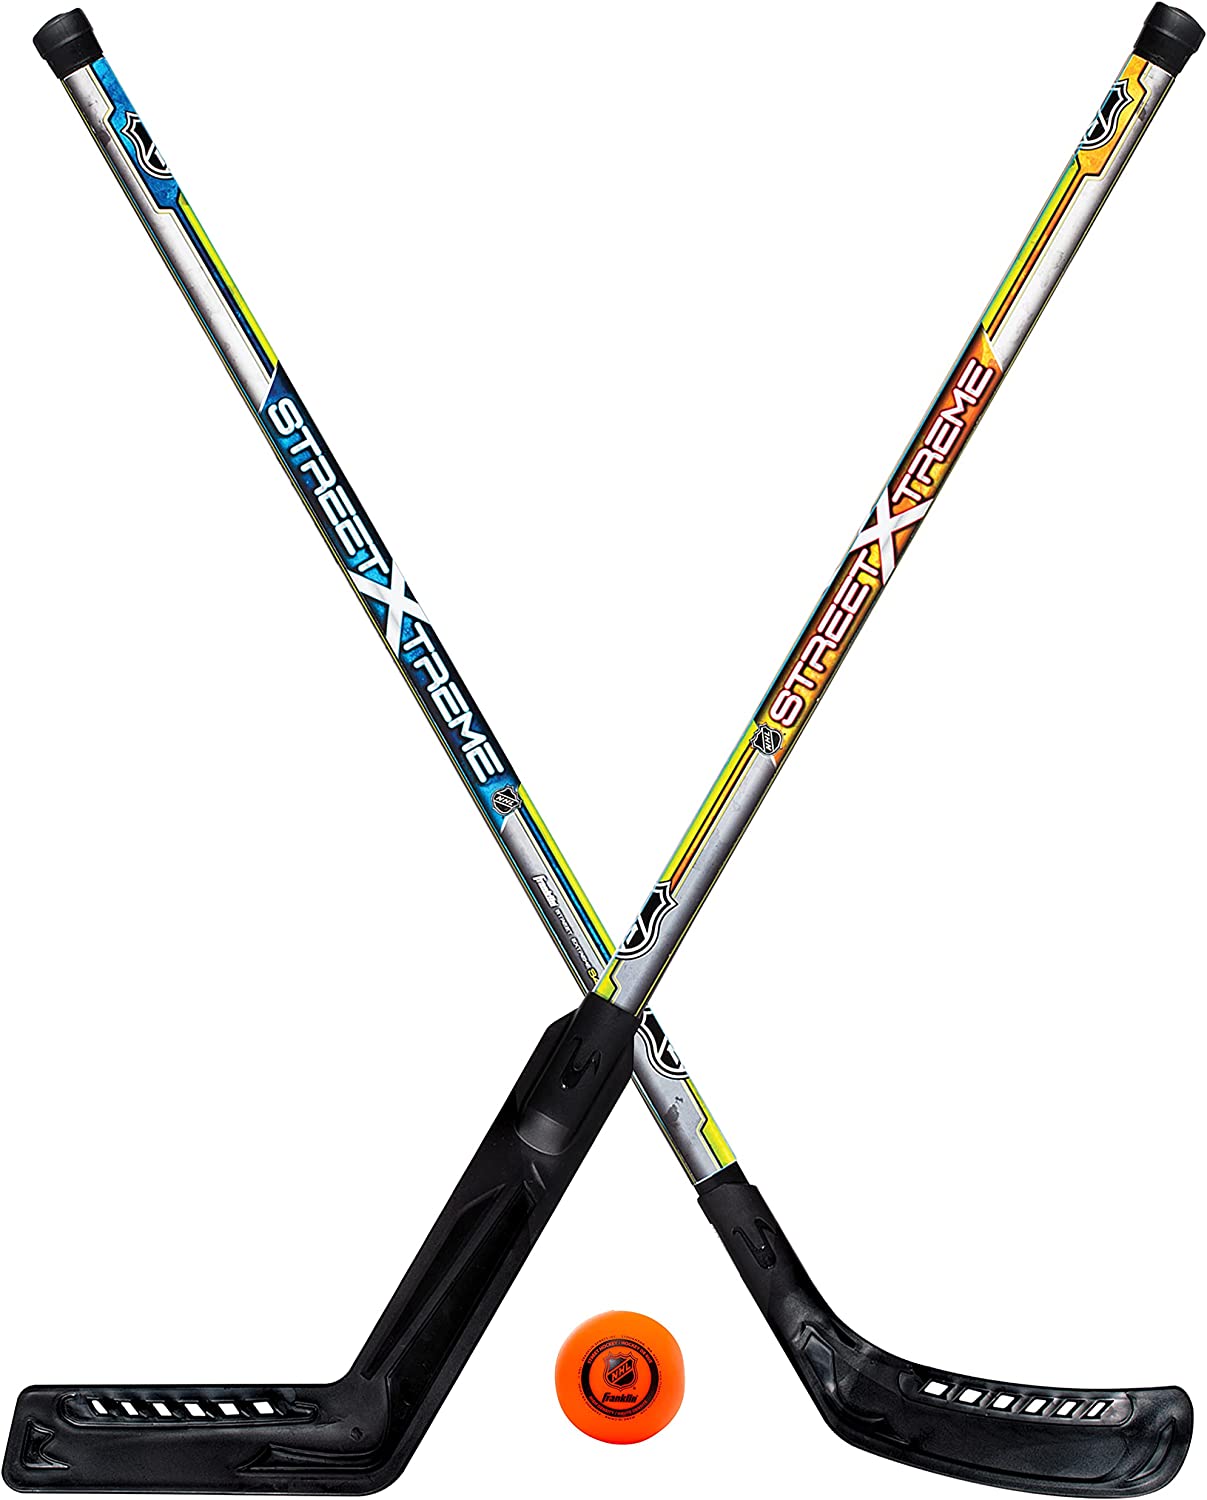 Ritual Hockey provides stylish and resilient hockey sticks.